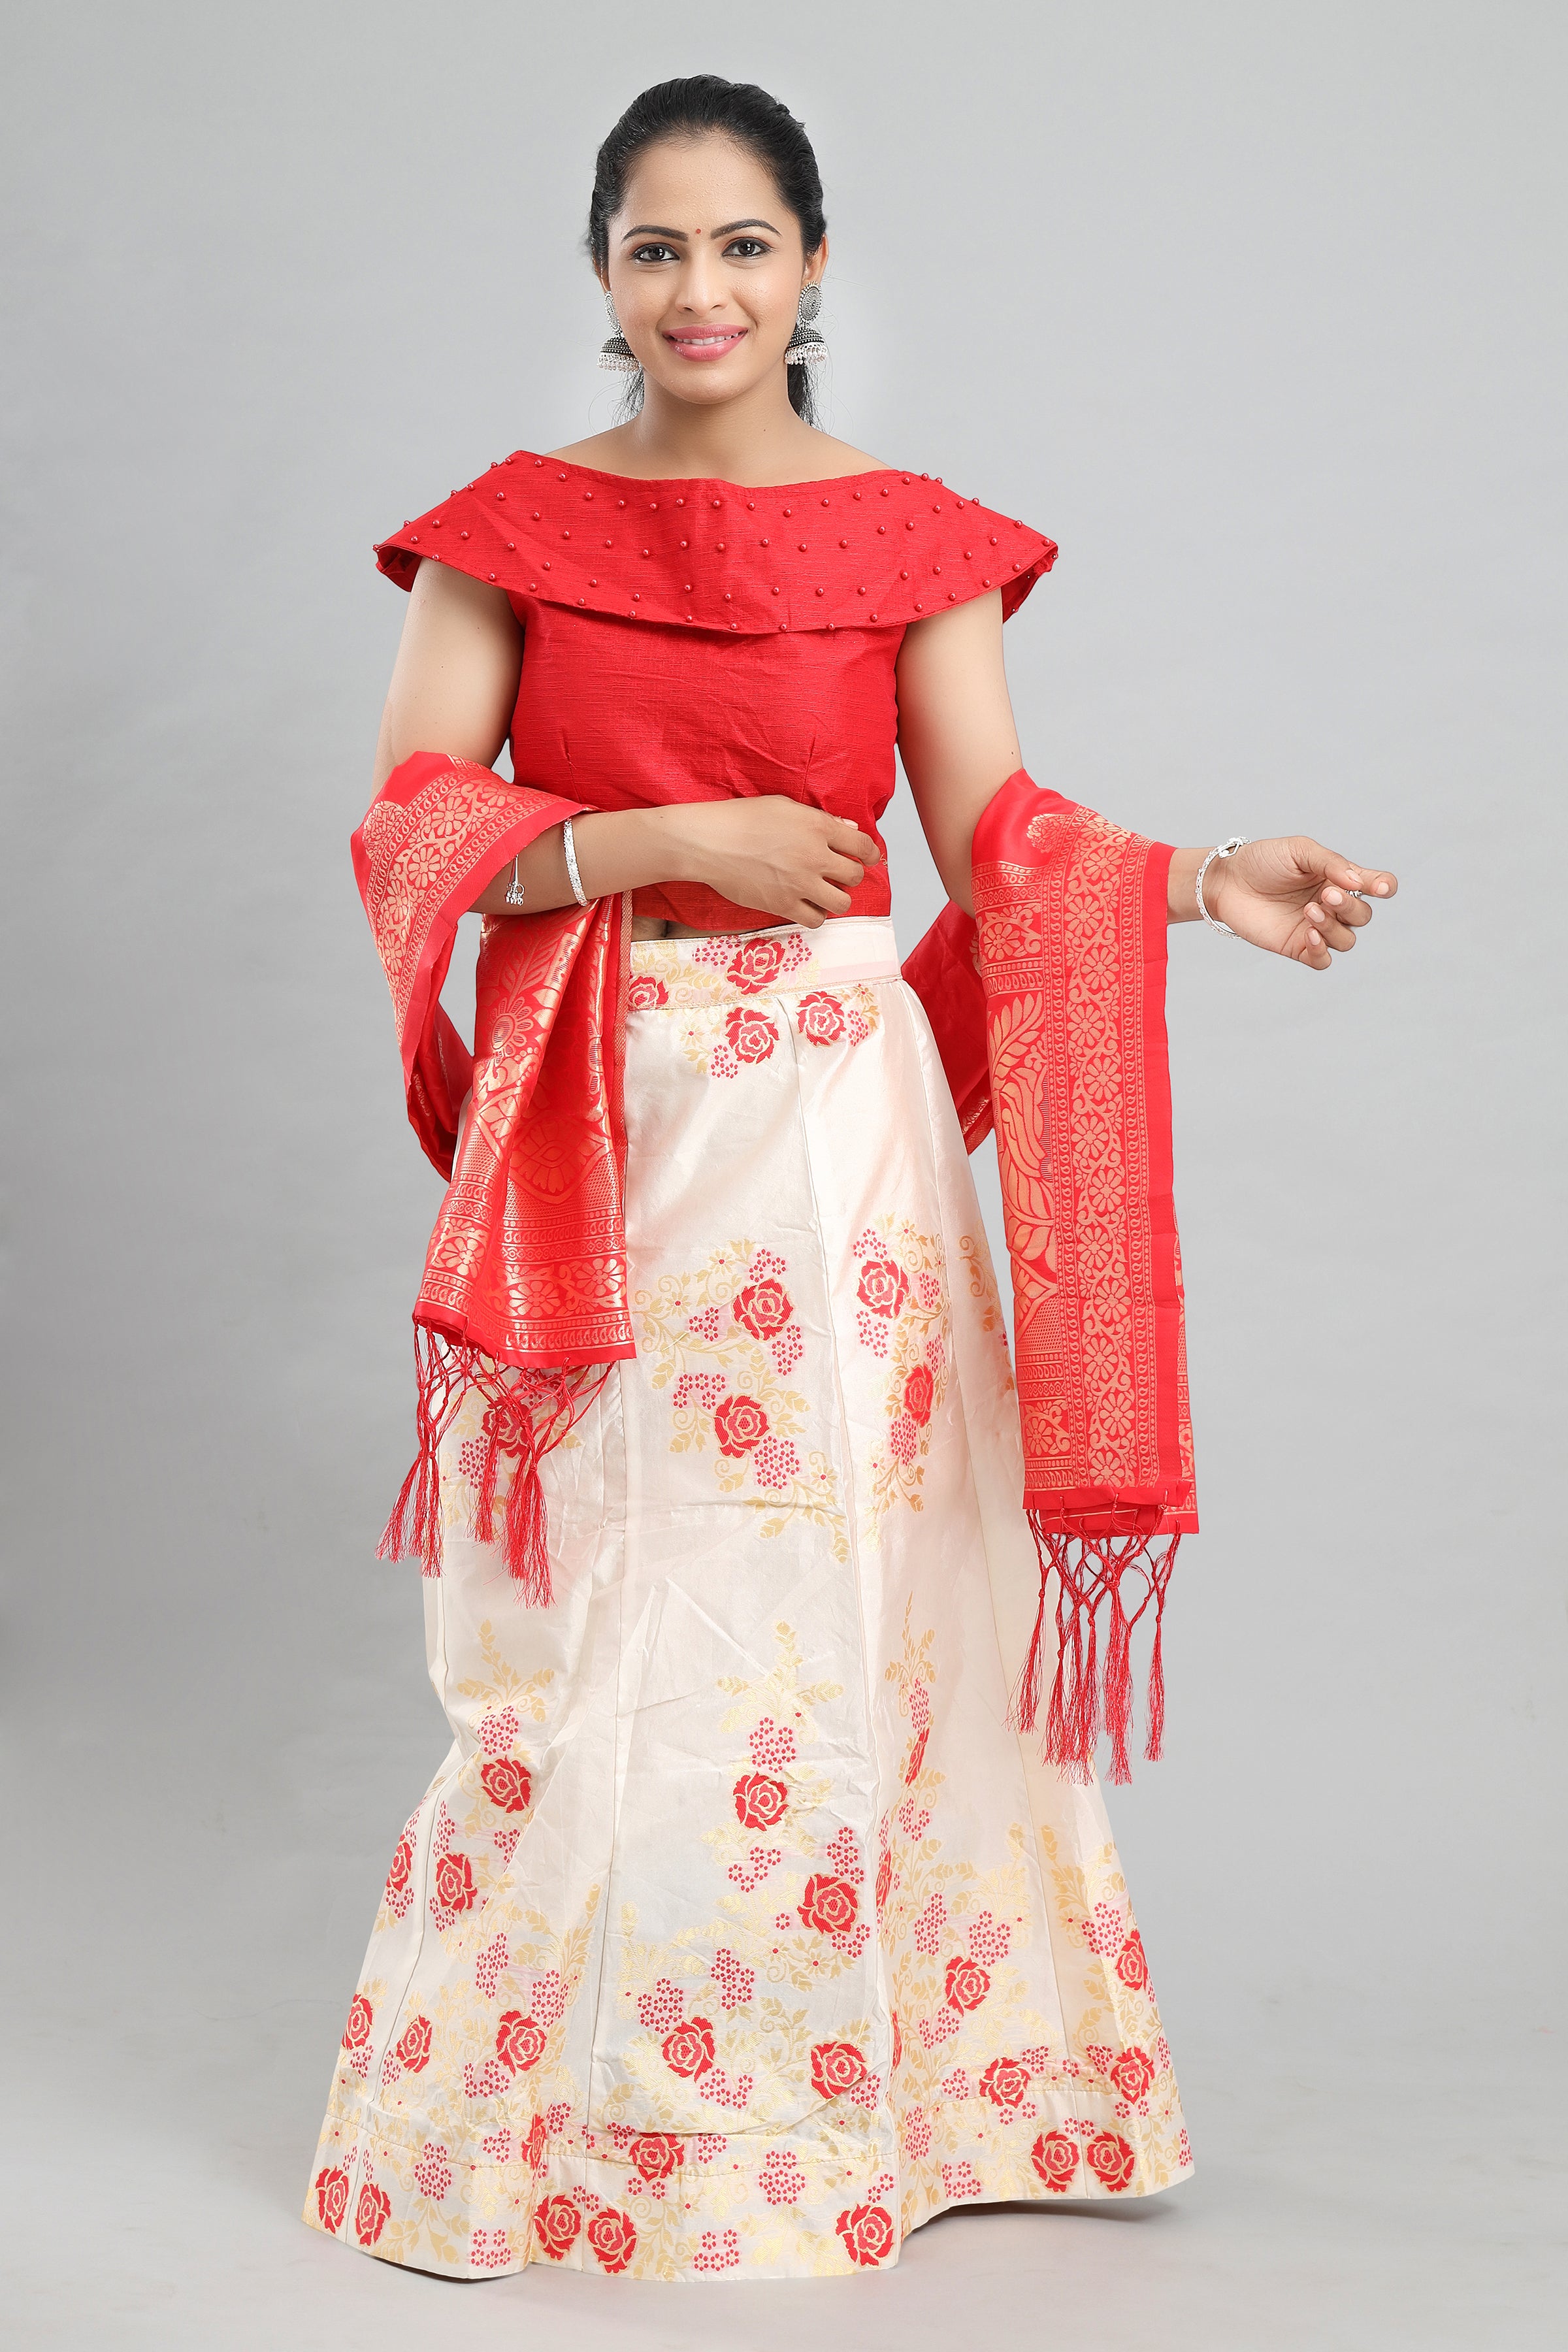 Women's Banarasi Red Floral Brocade Lehenga With Ready Made Blouse, Dupatta, Cane And Lining. - MANOHARA